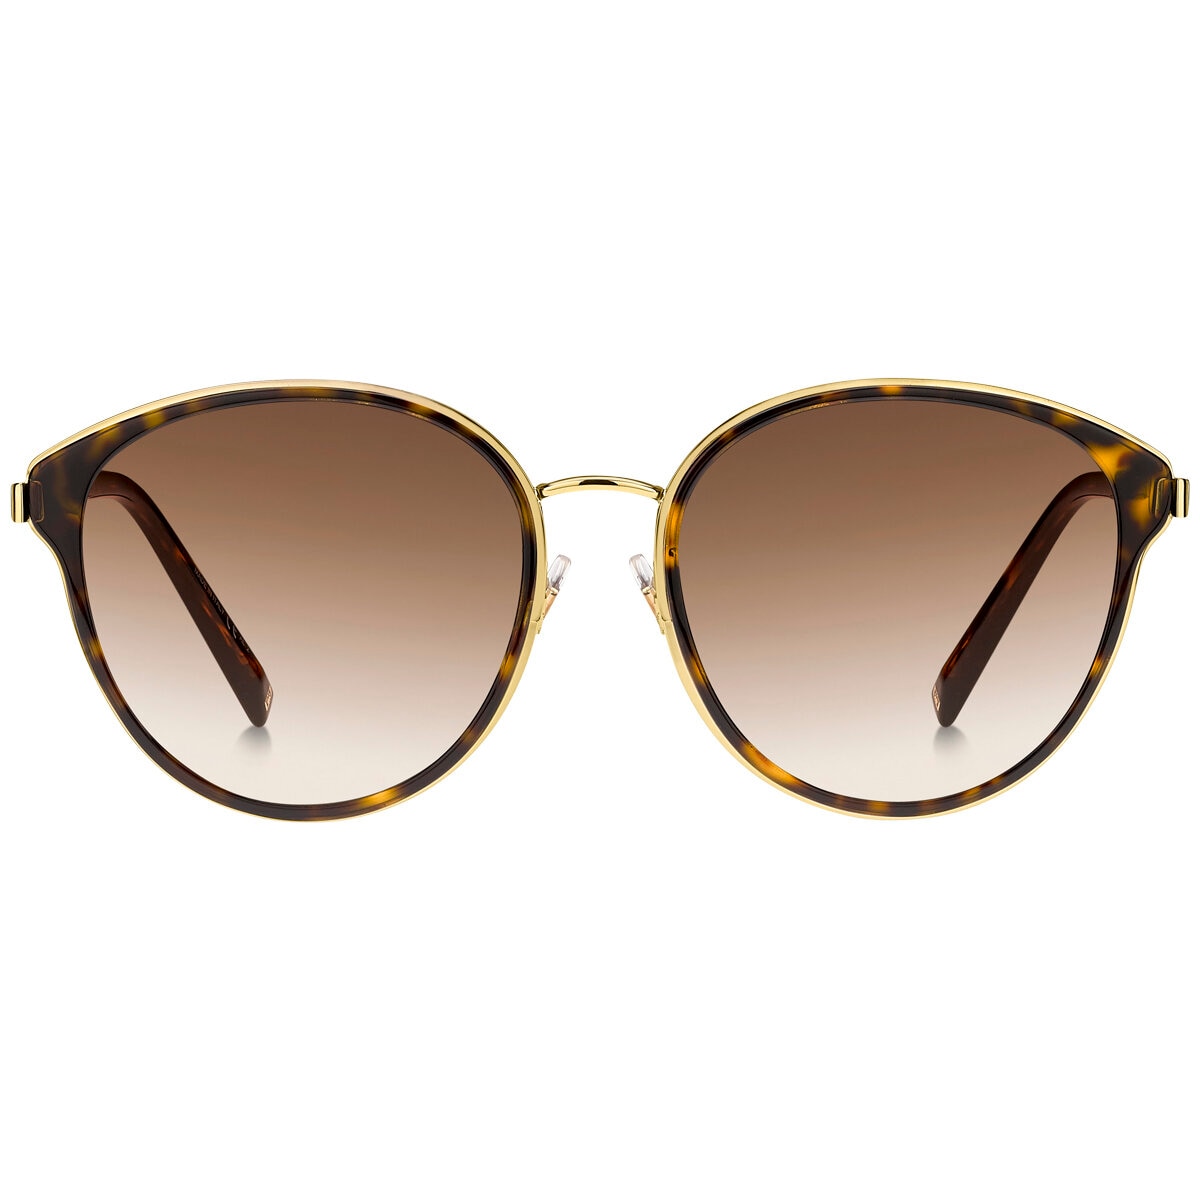 Givenchy GV7161/G/S Women’s Sunglasses